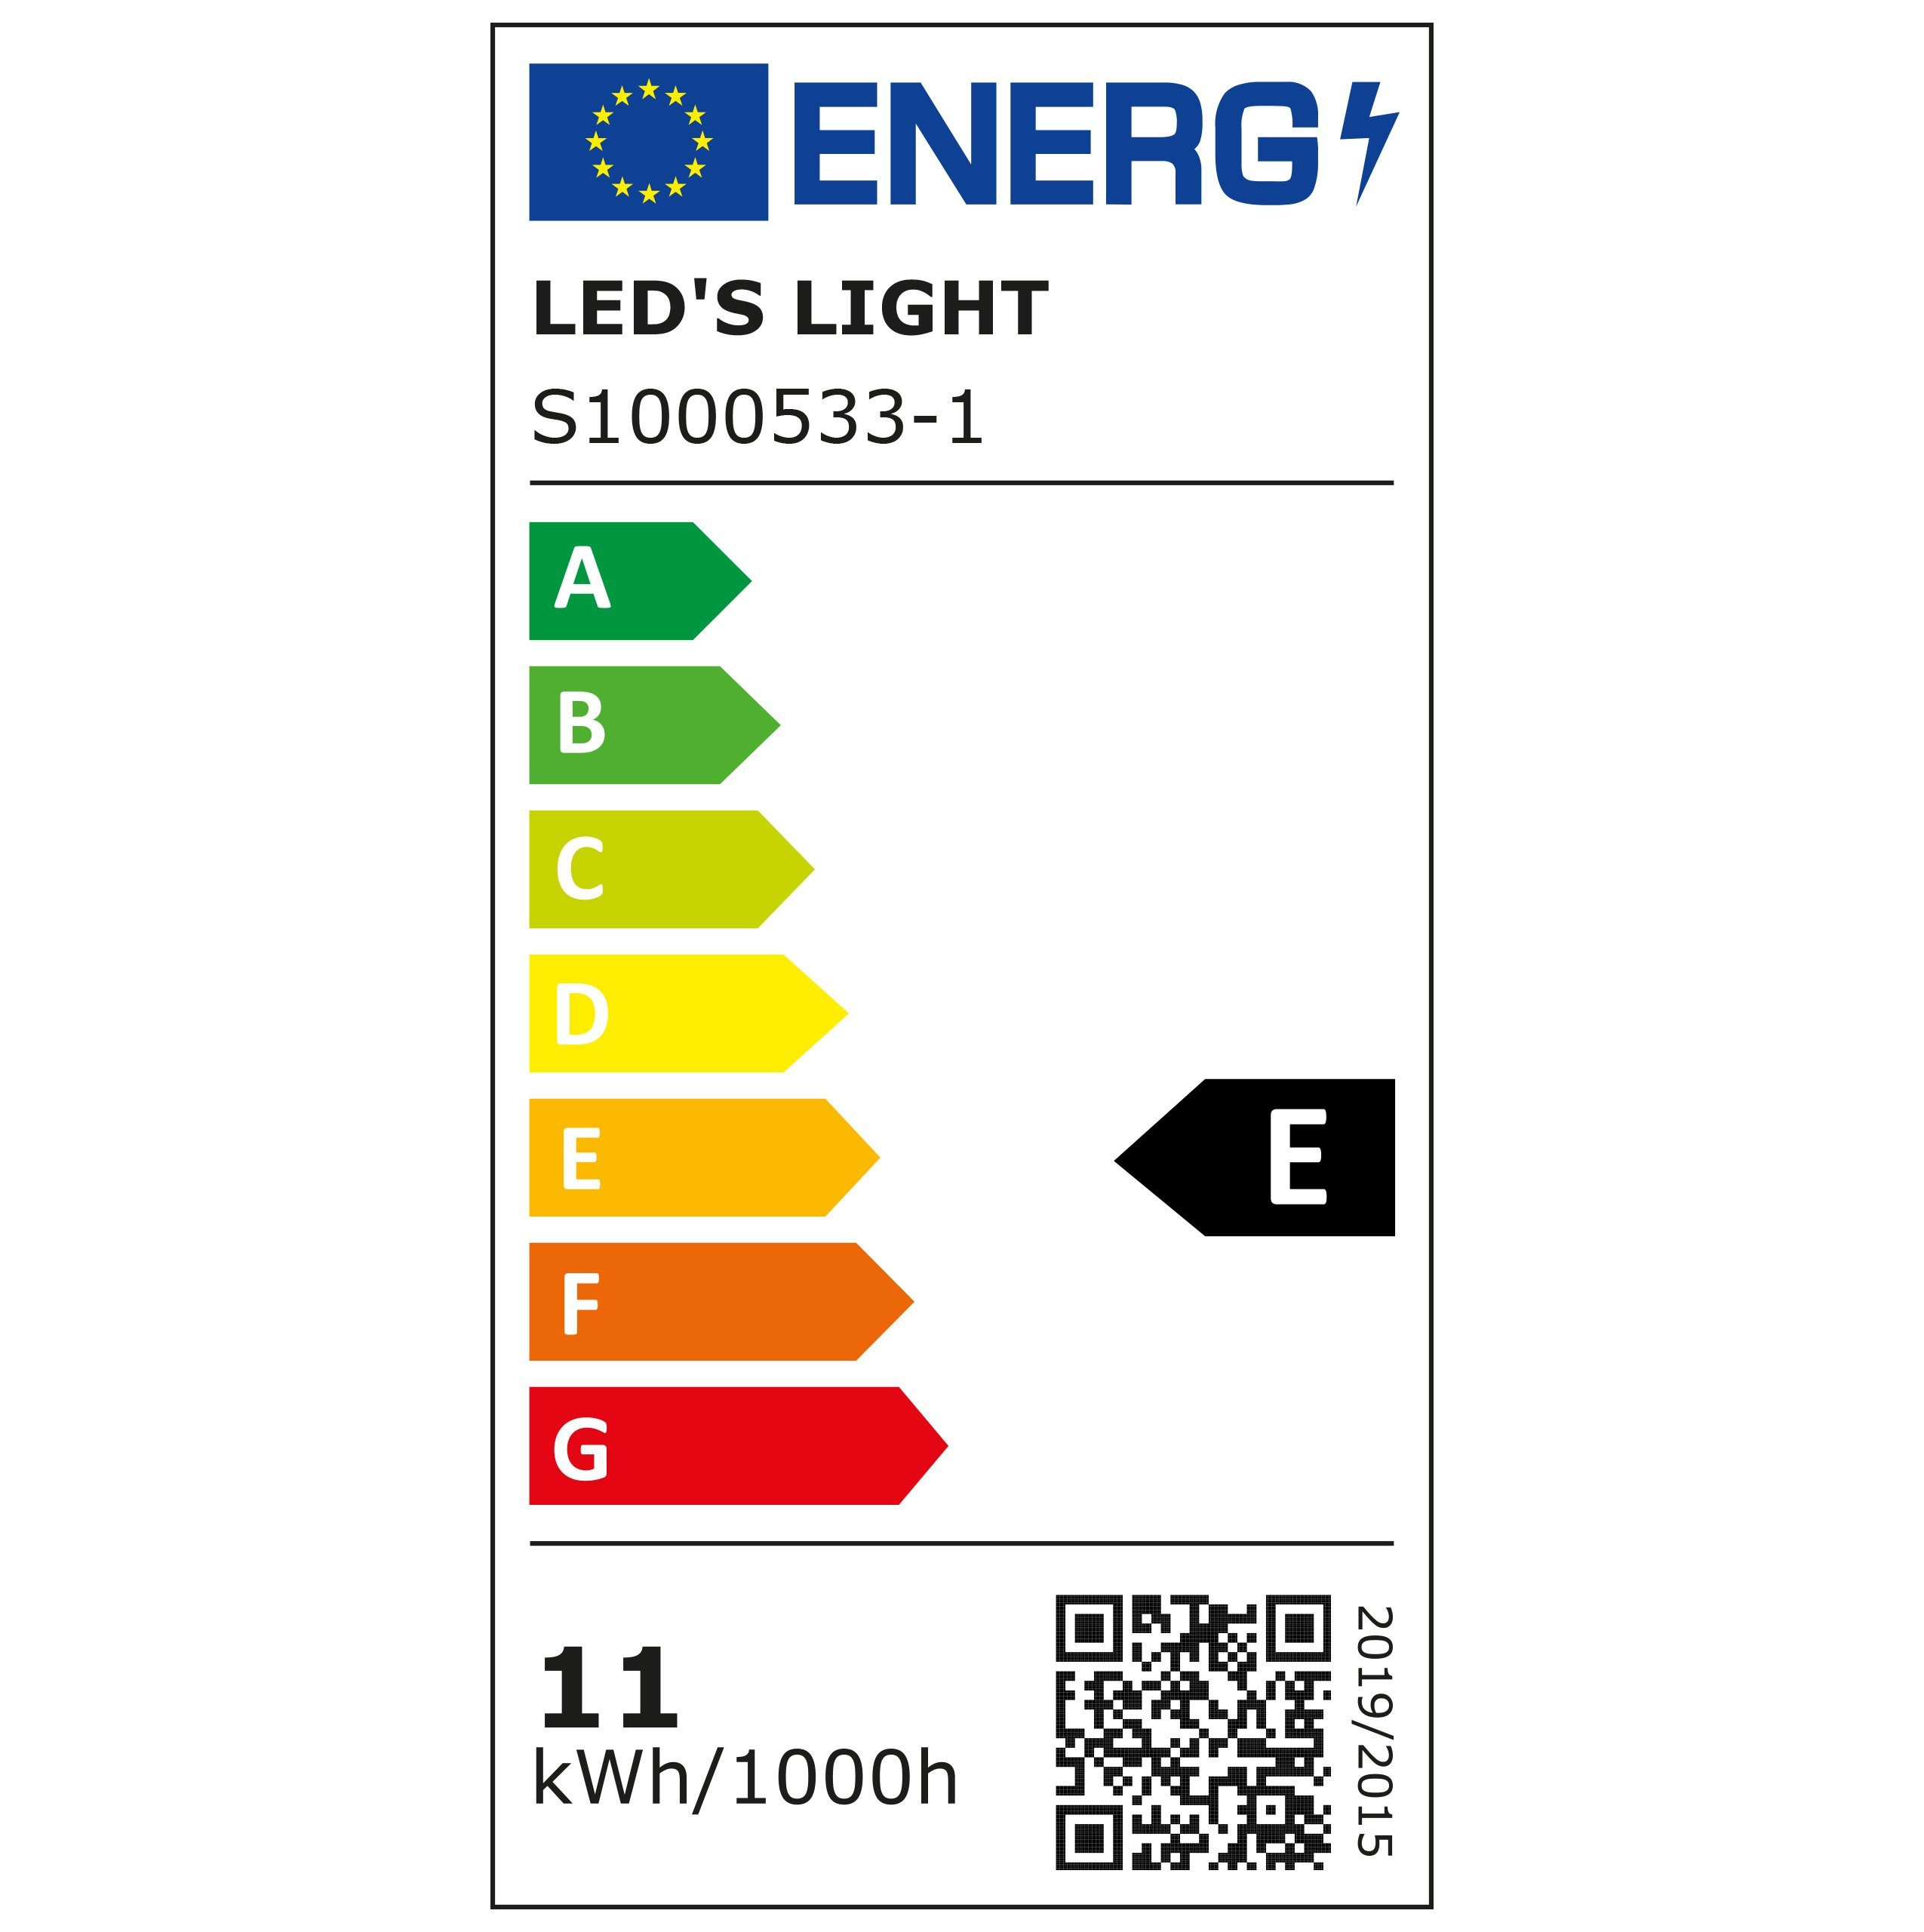 Watt LED, LED's 1000533 13 Außen-Wandleuchte anthrazit drehbar LED Außen-Wandleuchte, IP54 light LED